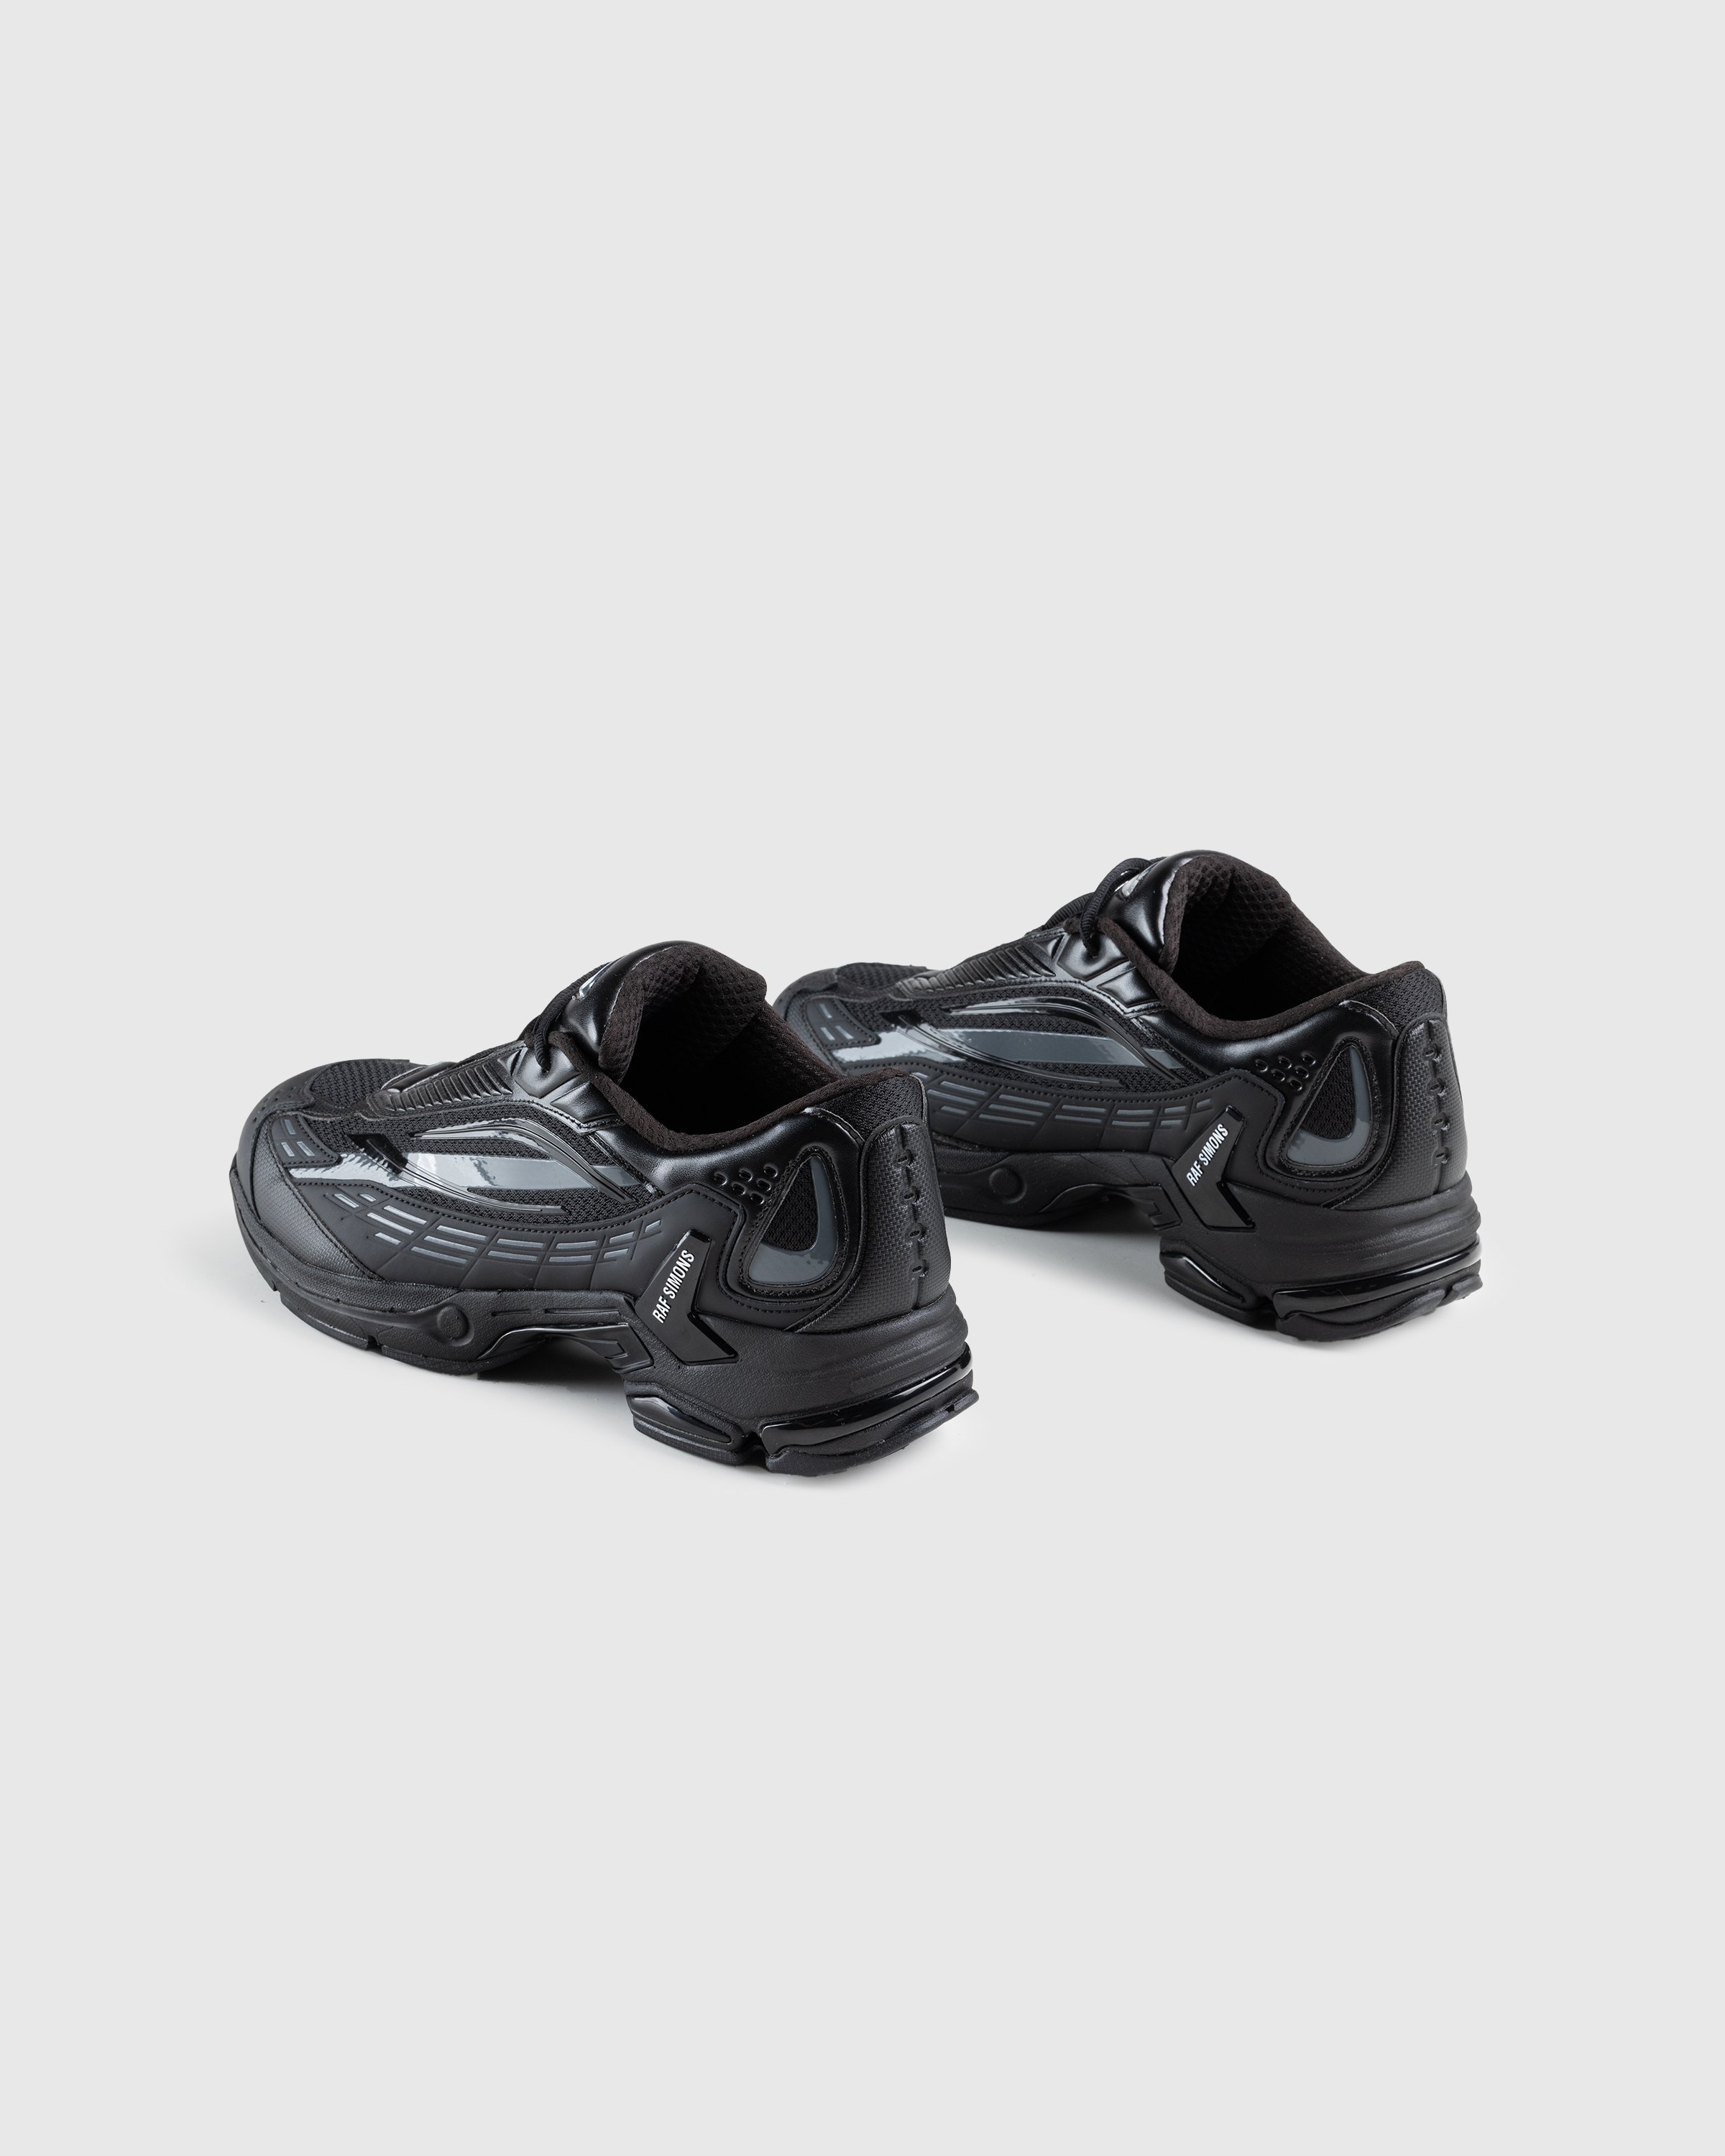 Raf Simons - Ultrasceptre Sneaker Black - Footwear - Black - Image 4